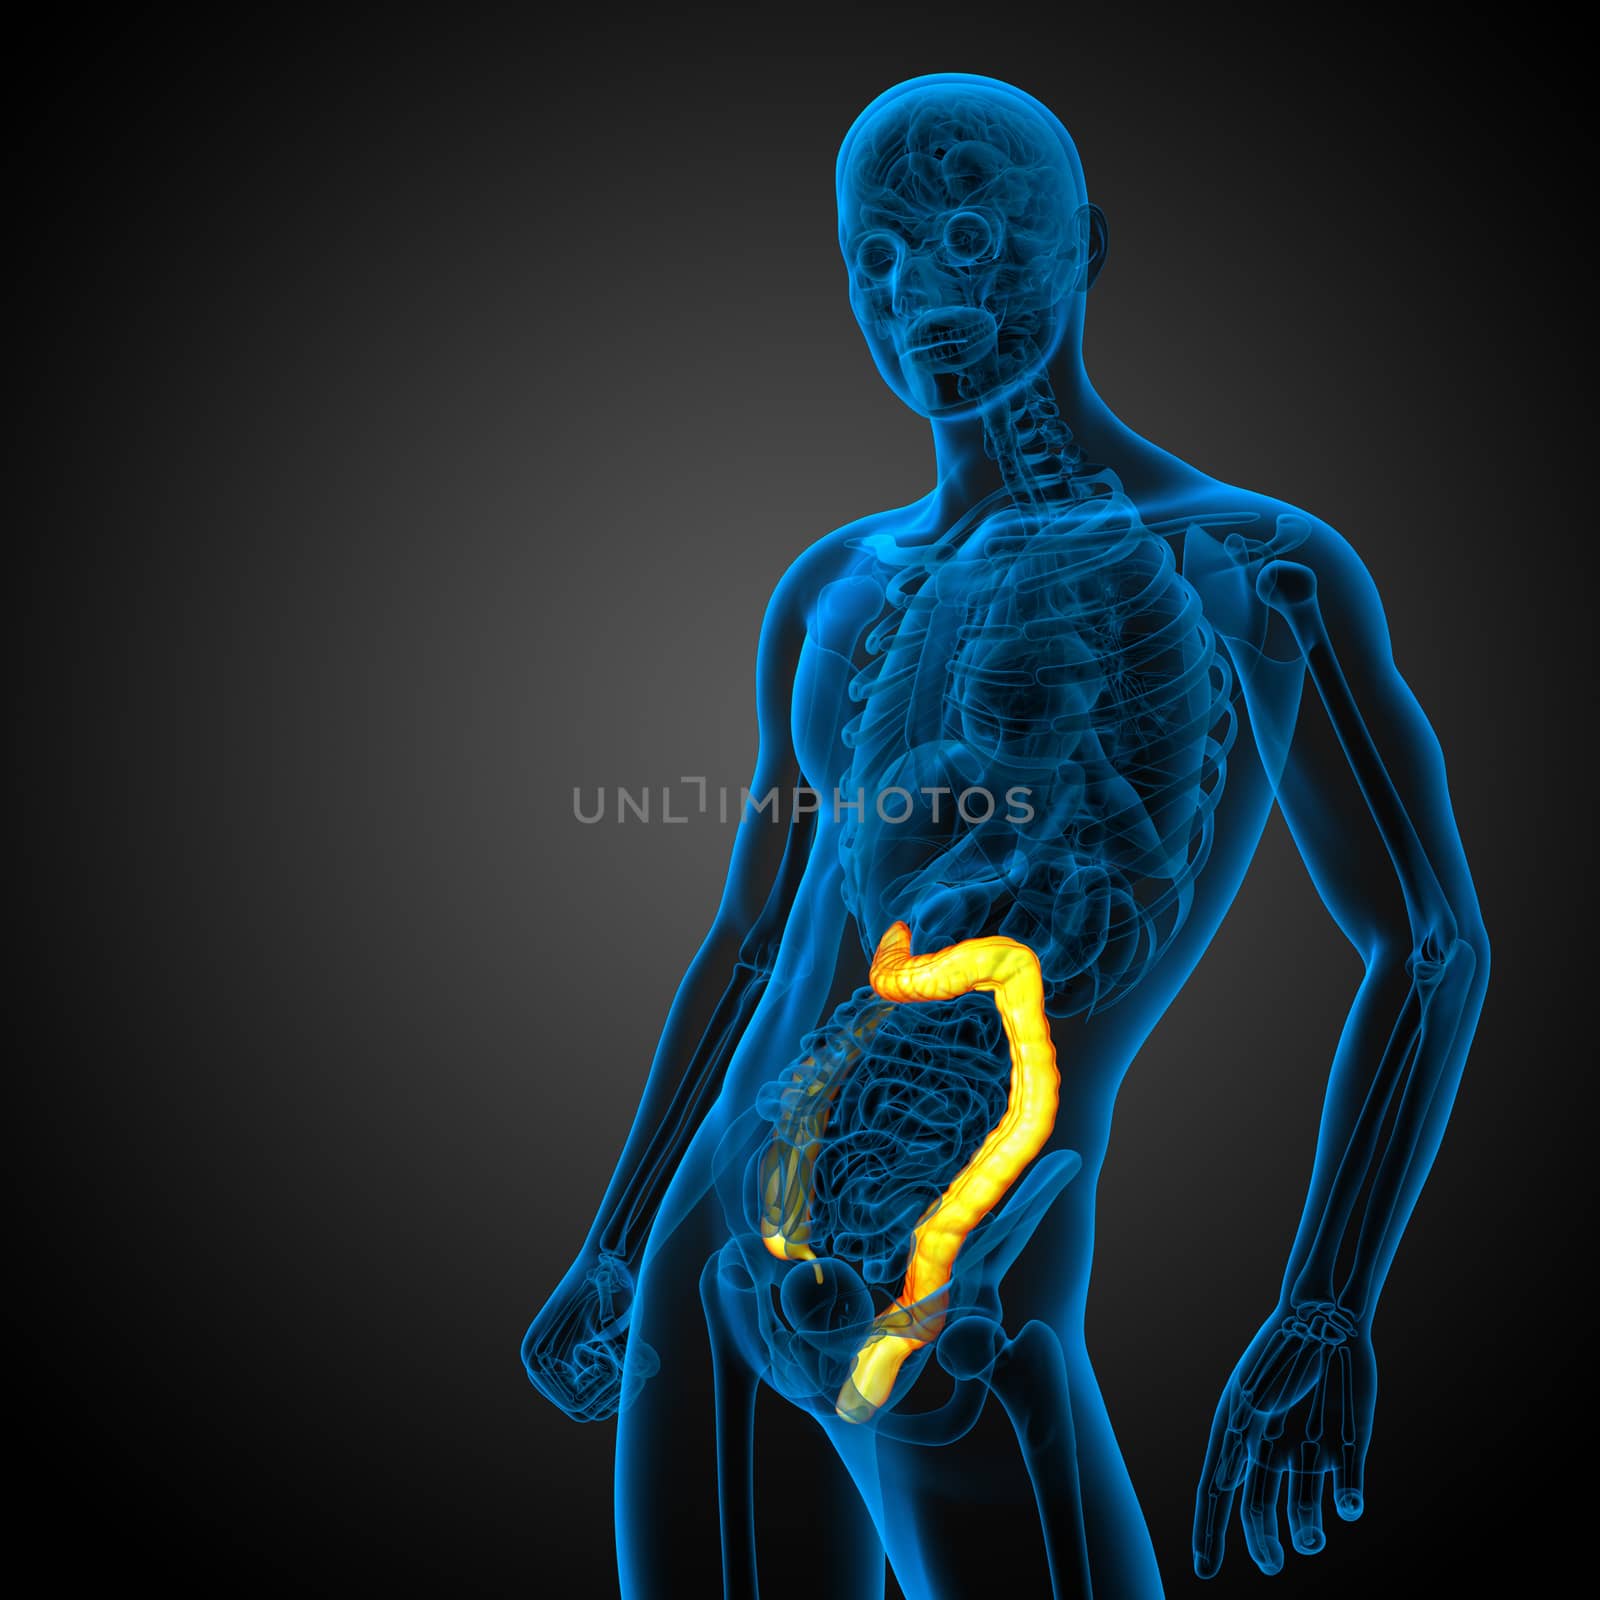 3d render medical illustration of the human larg intestine - side view